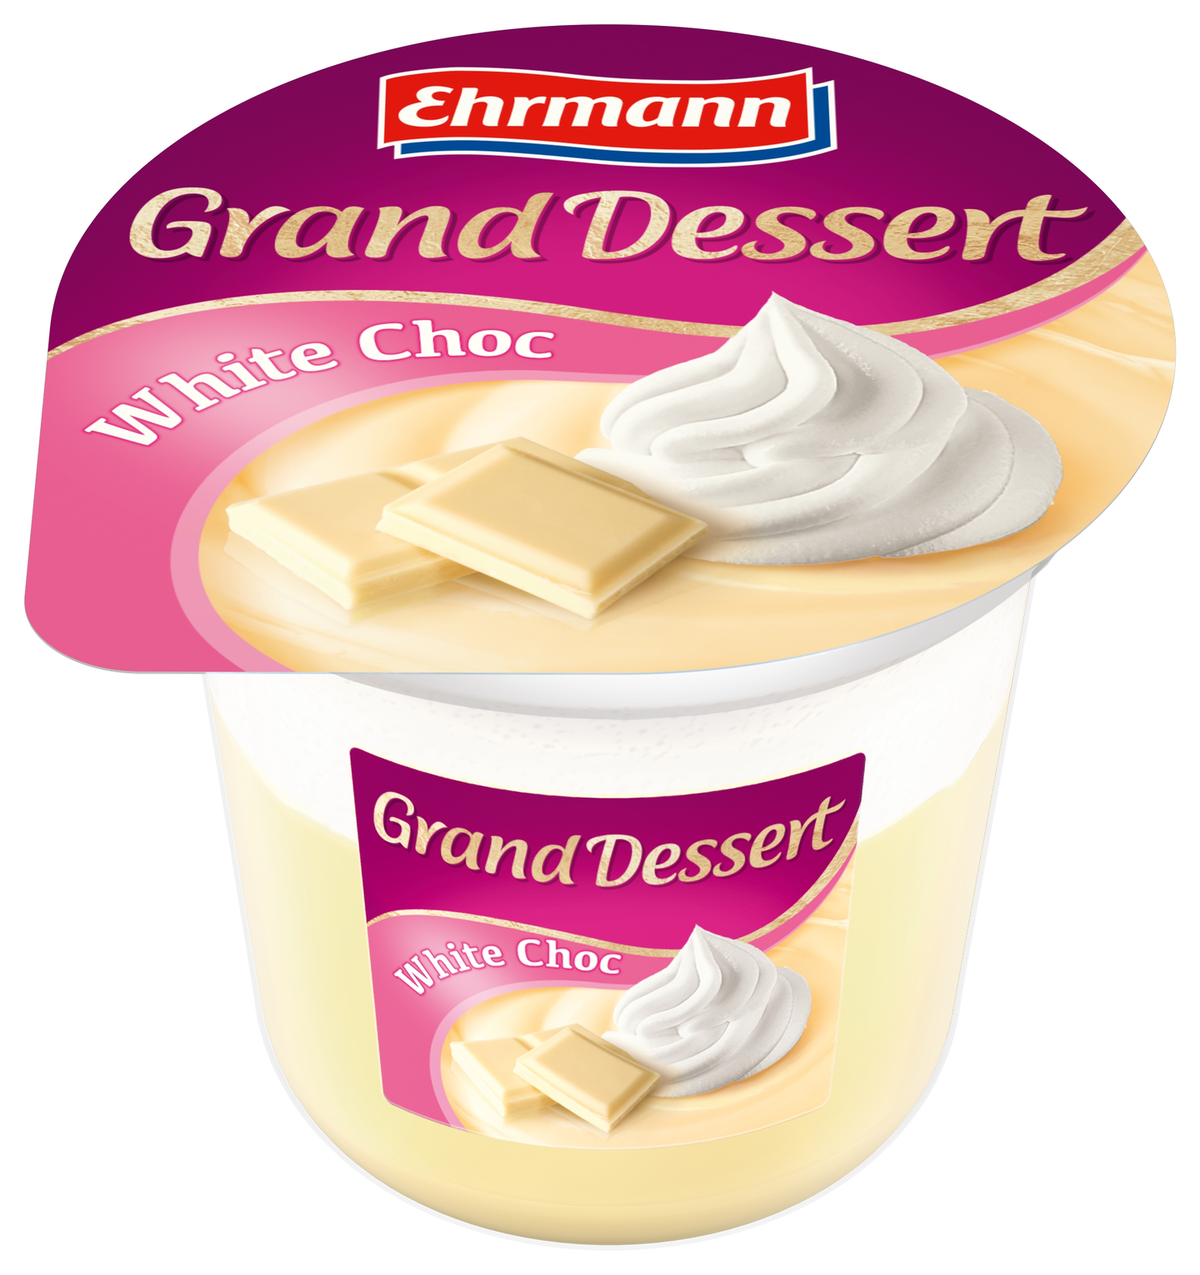 Пудинг Ehrmann Grand Dessert шоколад. Grand Desert пудинг шоколад. Пудинг Эрманн Гранд десерт 200г. Десерт Эрманн Гранд белый шоколад. Ehrmann grand dessert шоколад